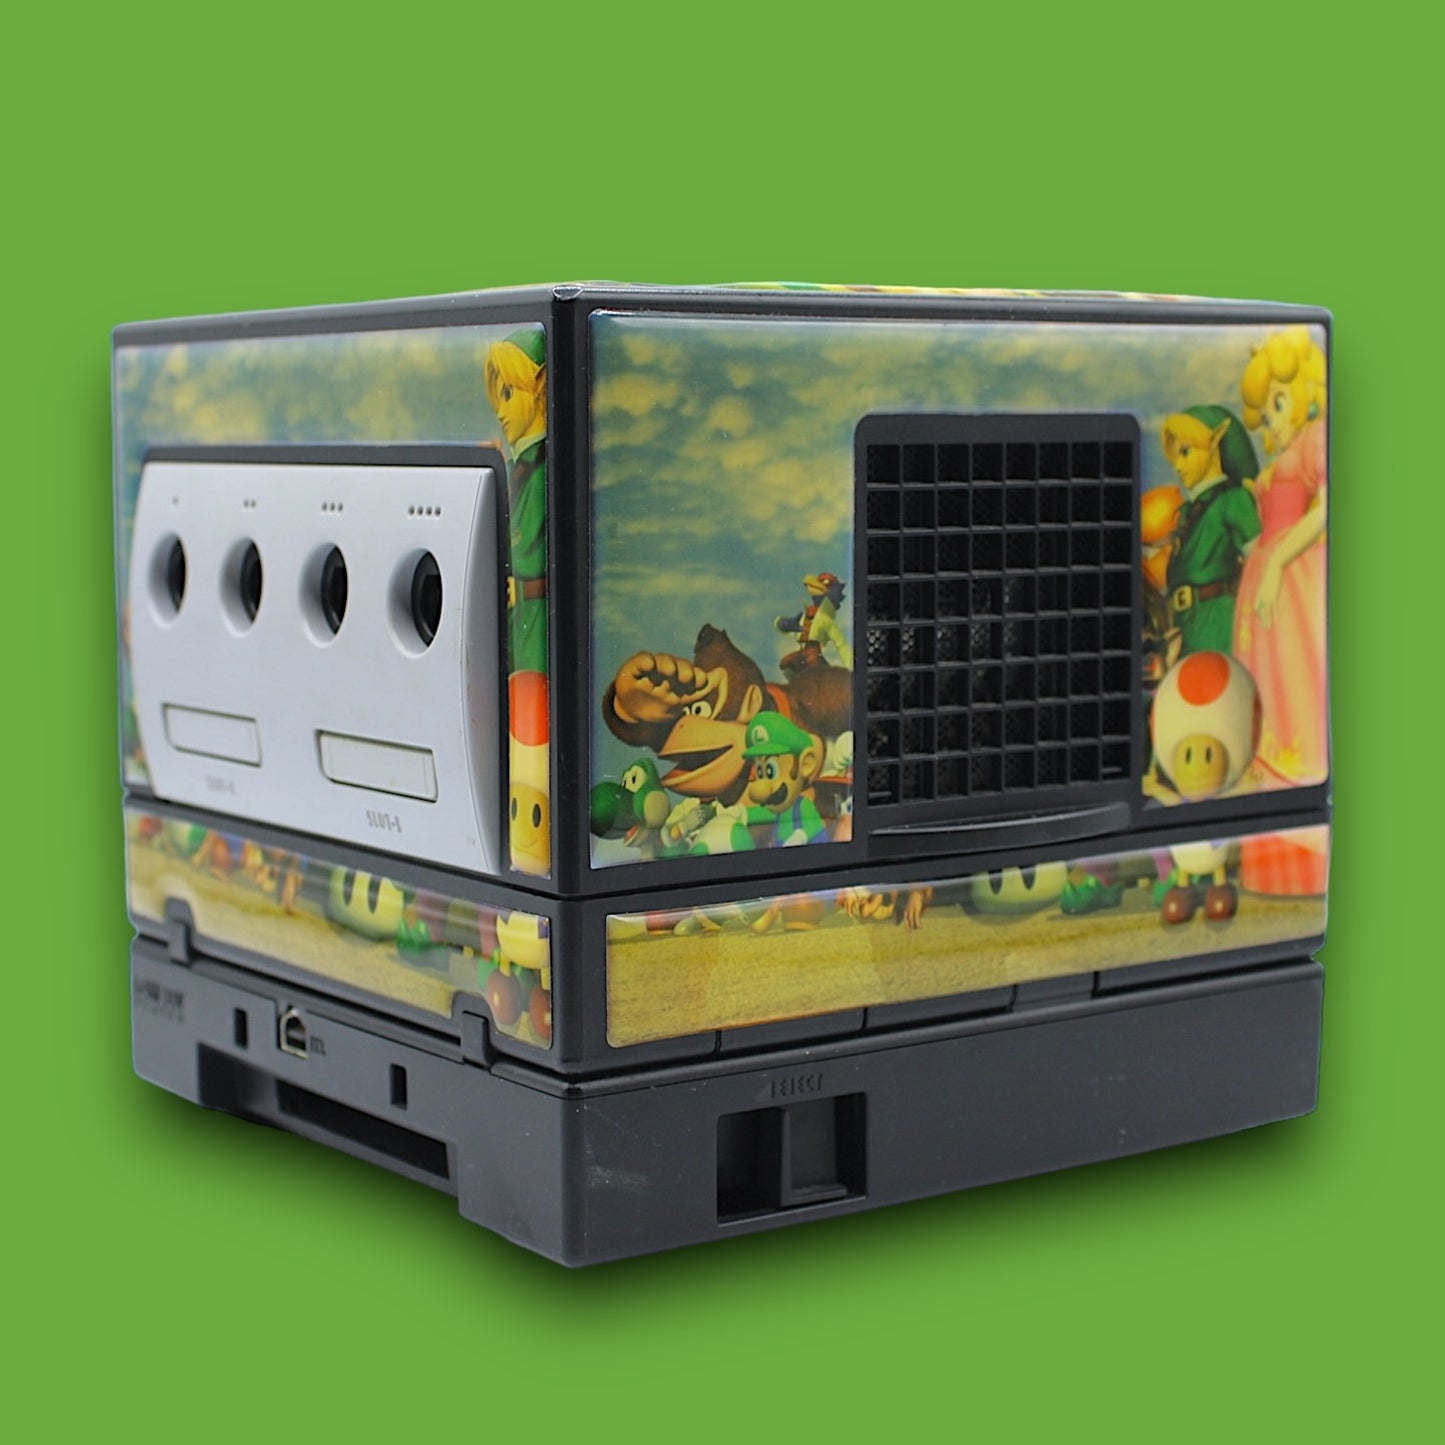 Super Smash Bros Skin - Xeno Chip Modded Nintendo GameCube W/ Game Boy Player & 32GB Micro SD Card Bundle